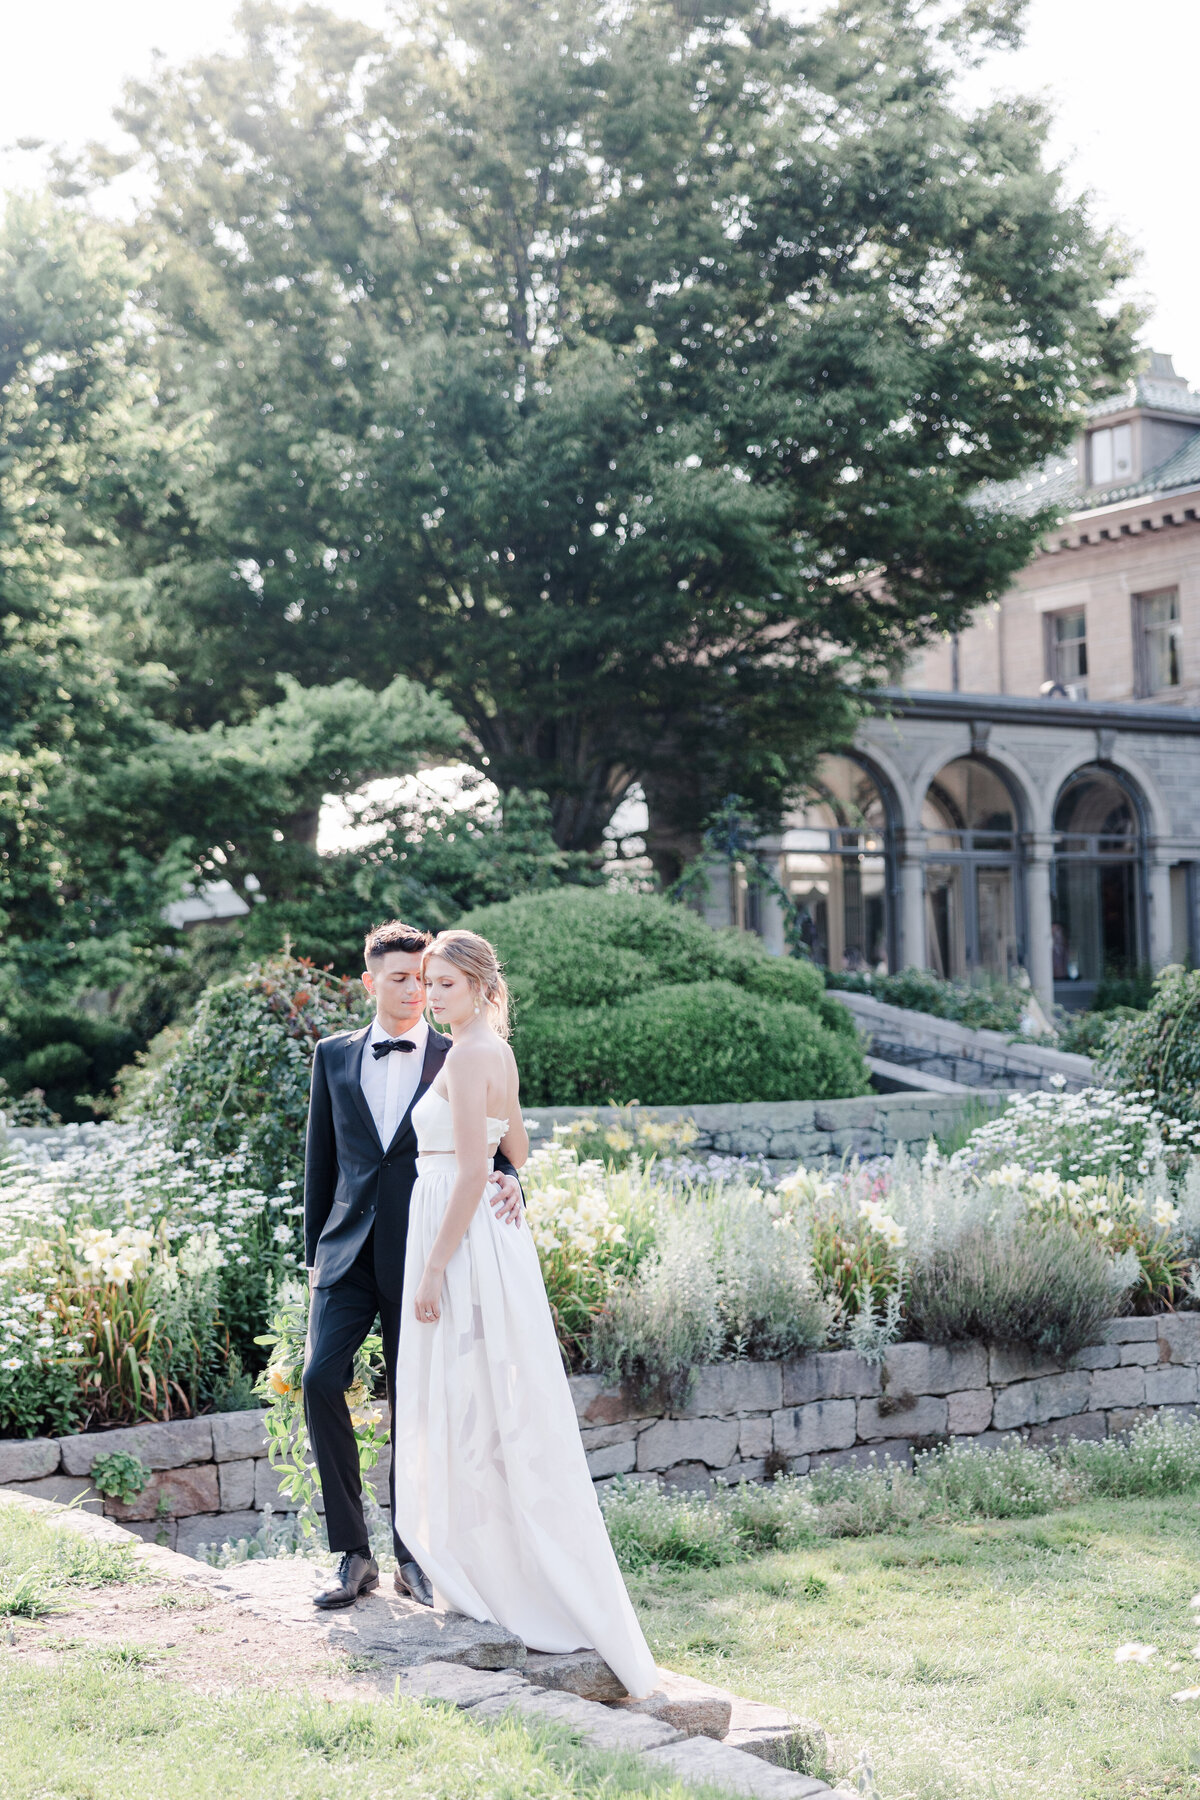 groom and bride walking in gardens at their wedding venue